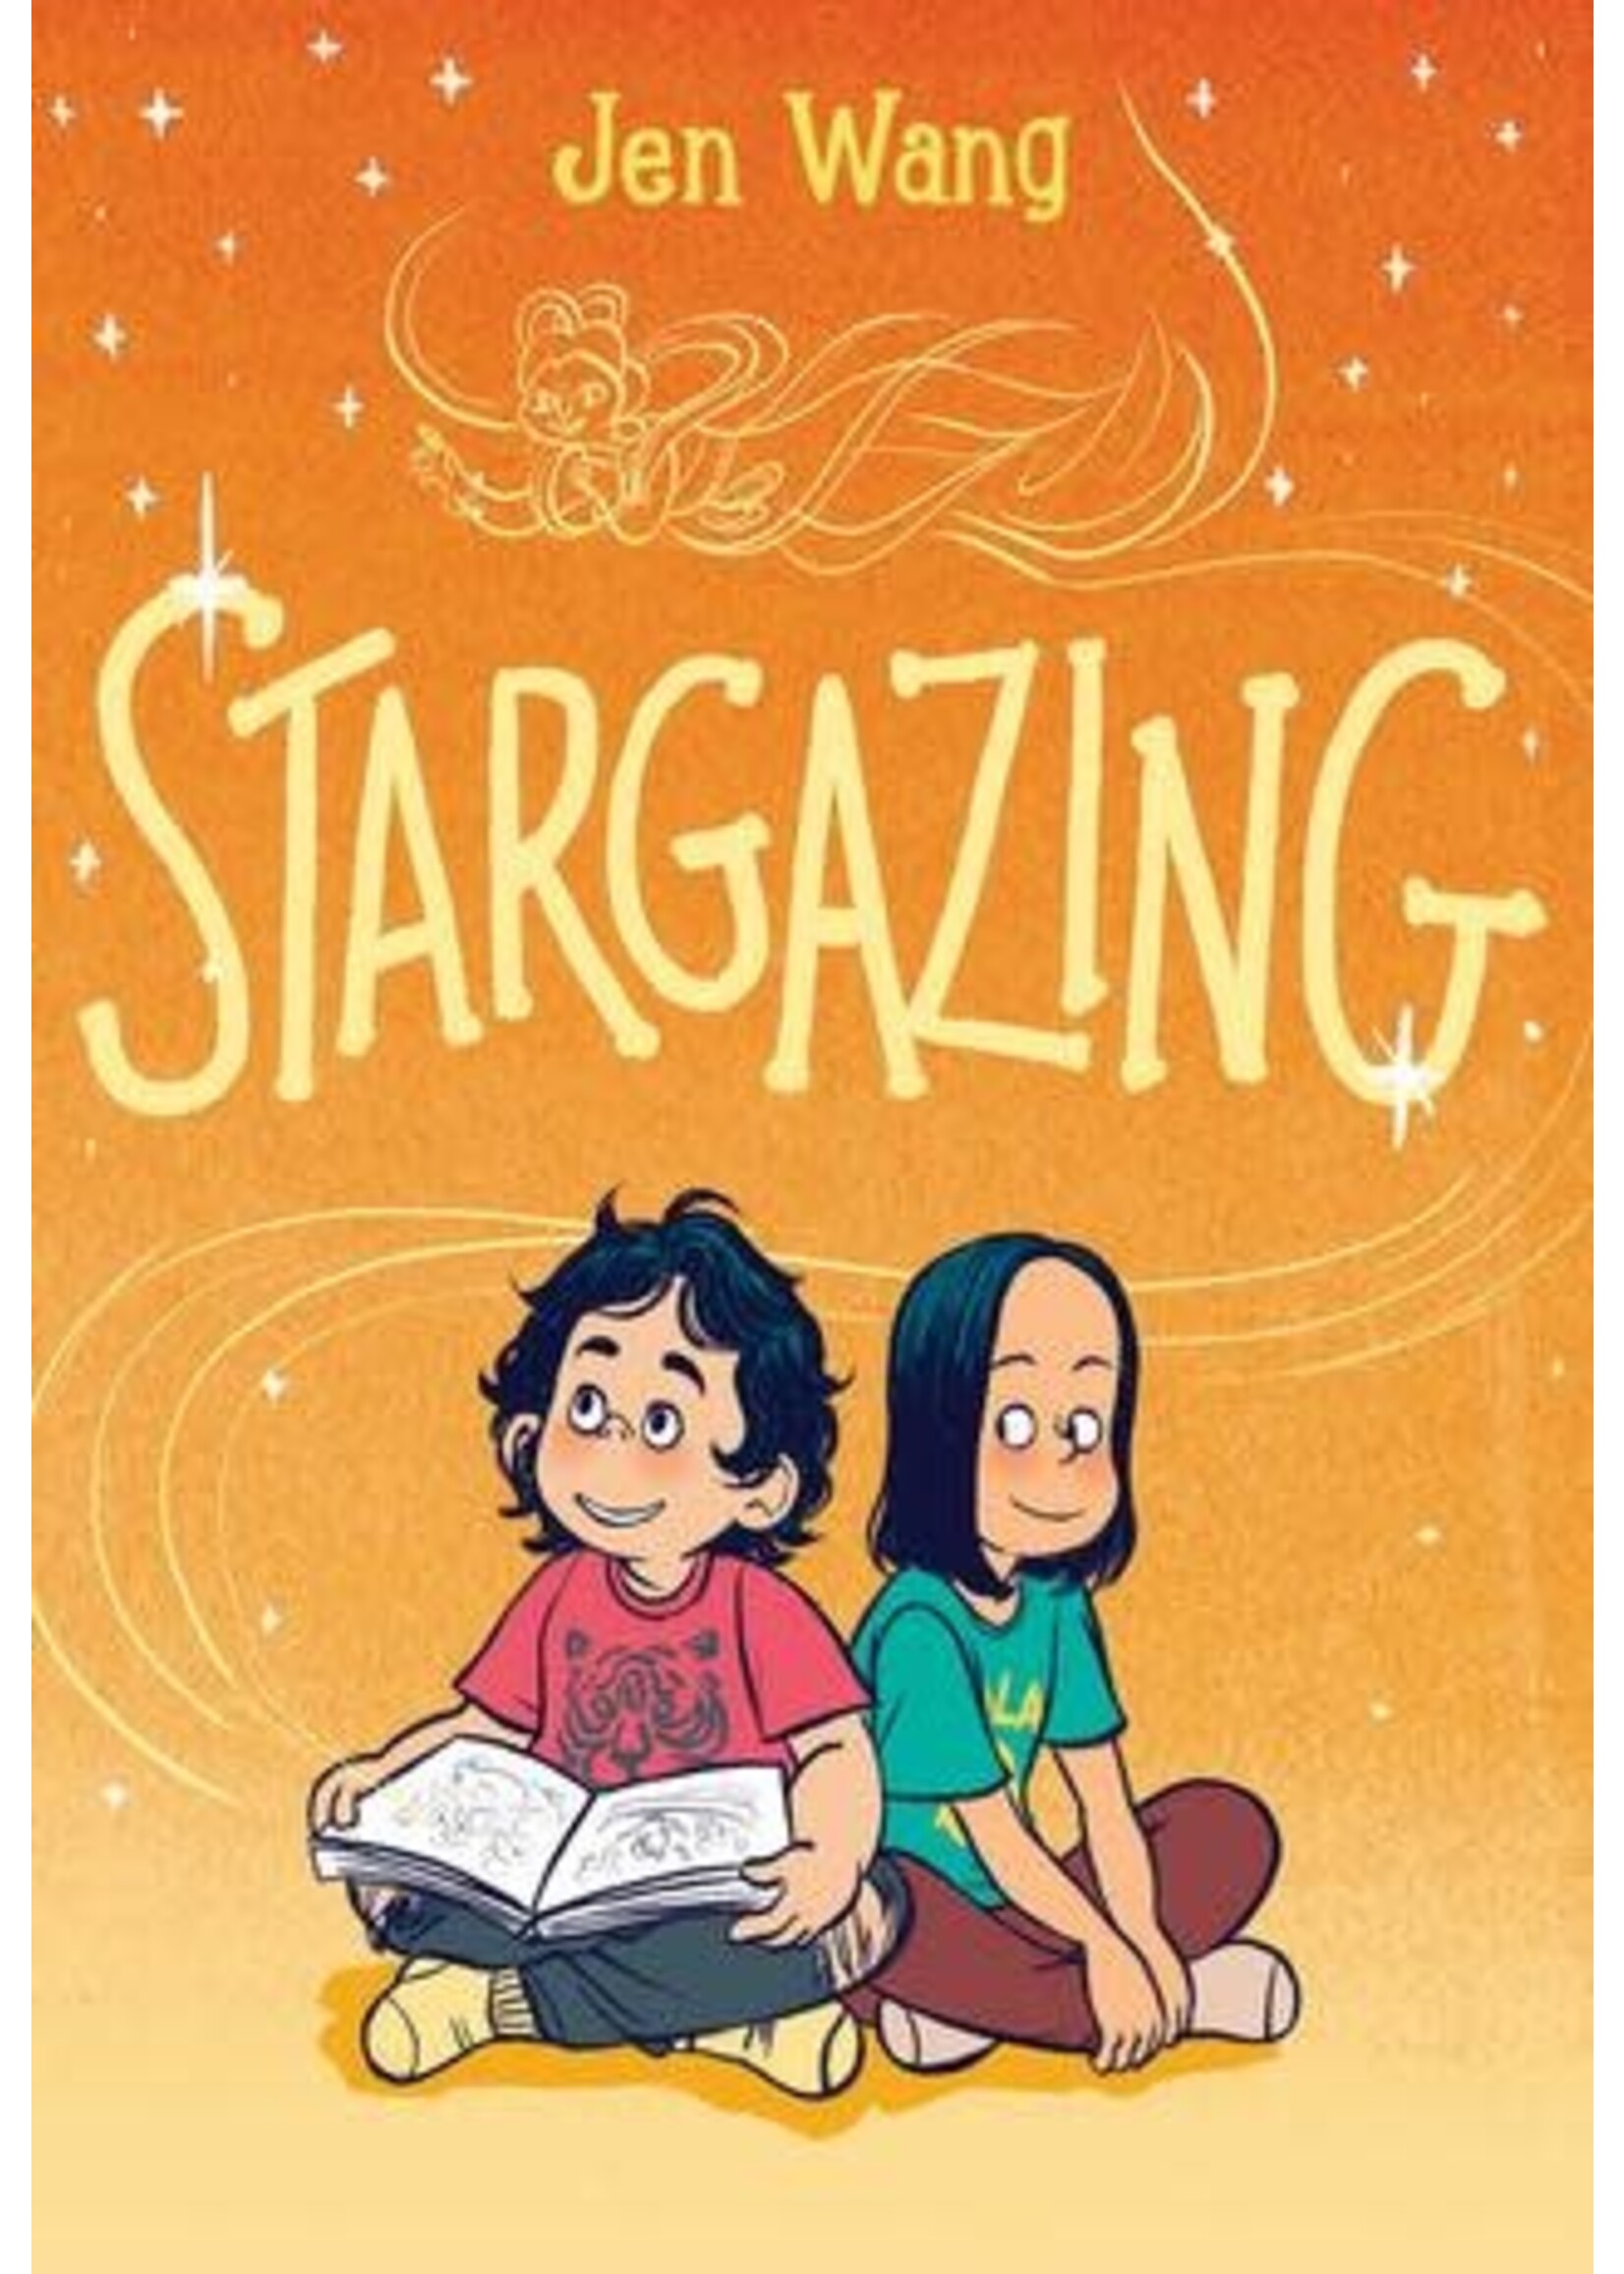 Stargazing by Jen Wang